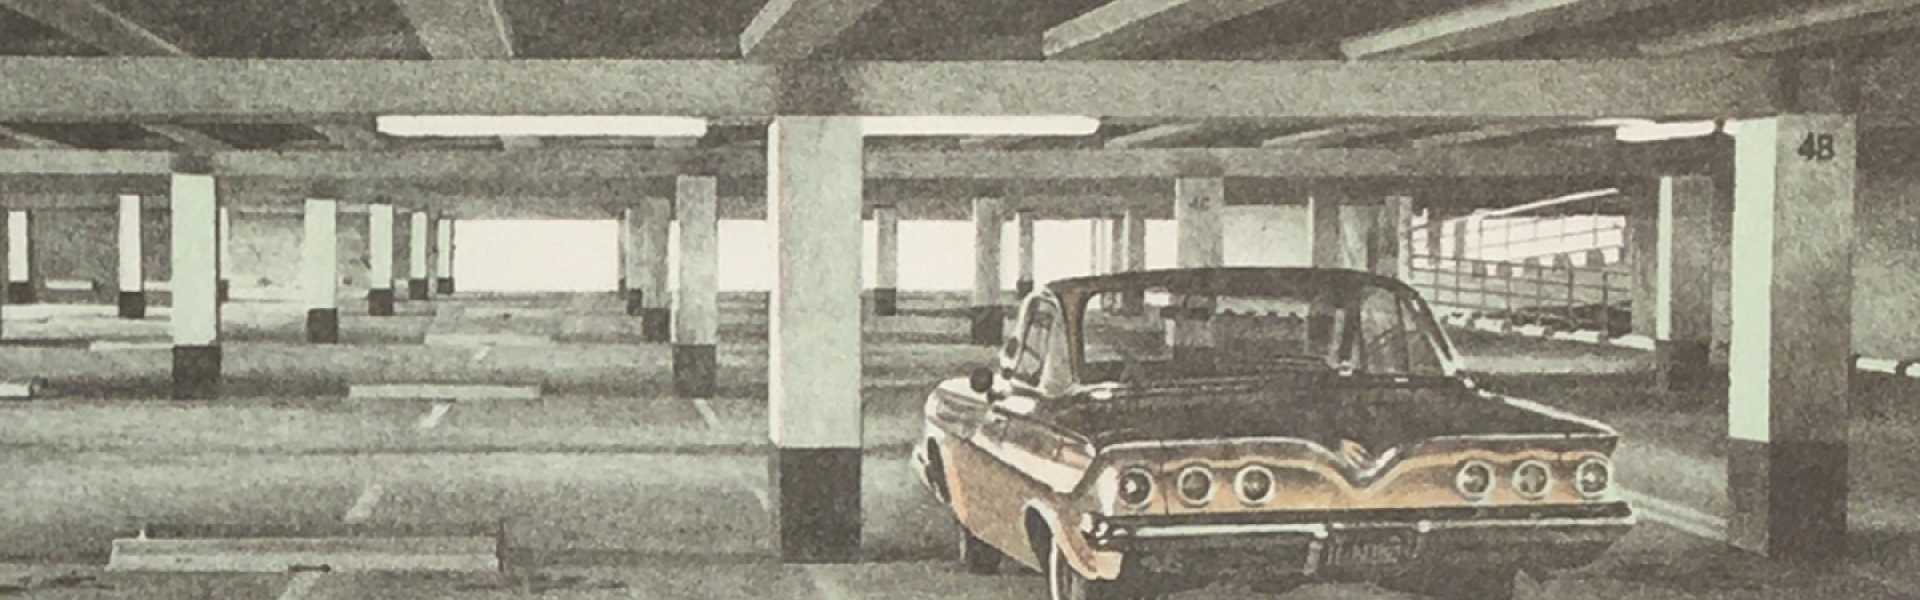 Impala car in garage artwork